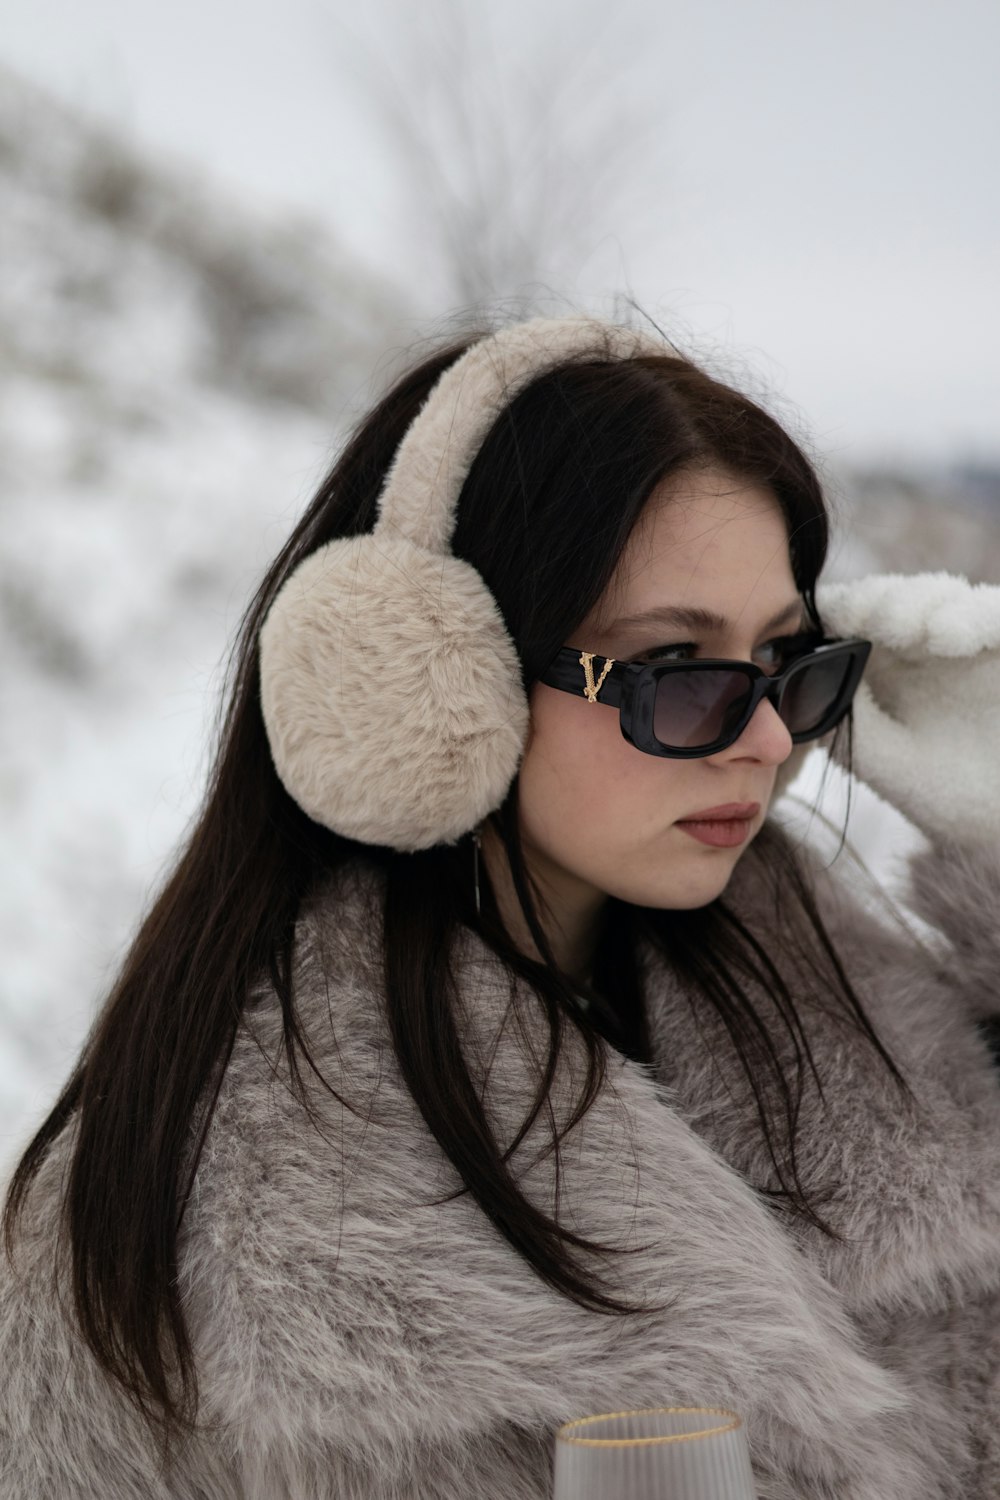 a woman wearing headphones and a fur coat